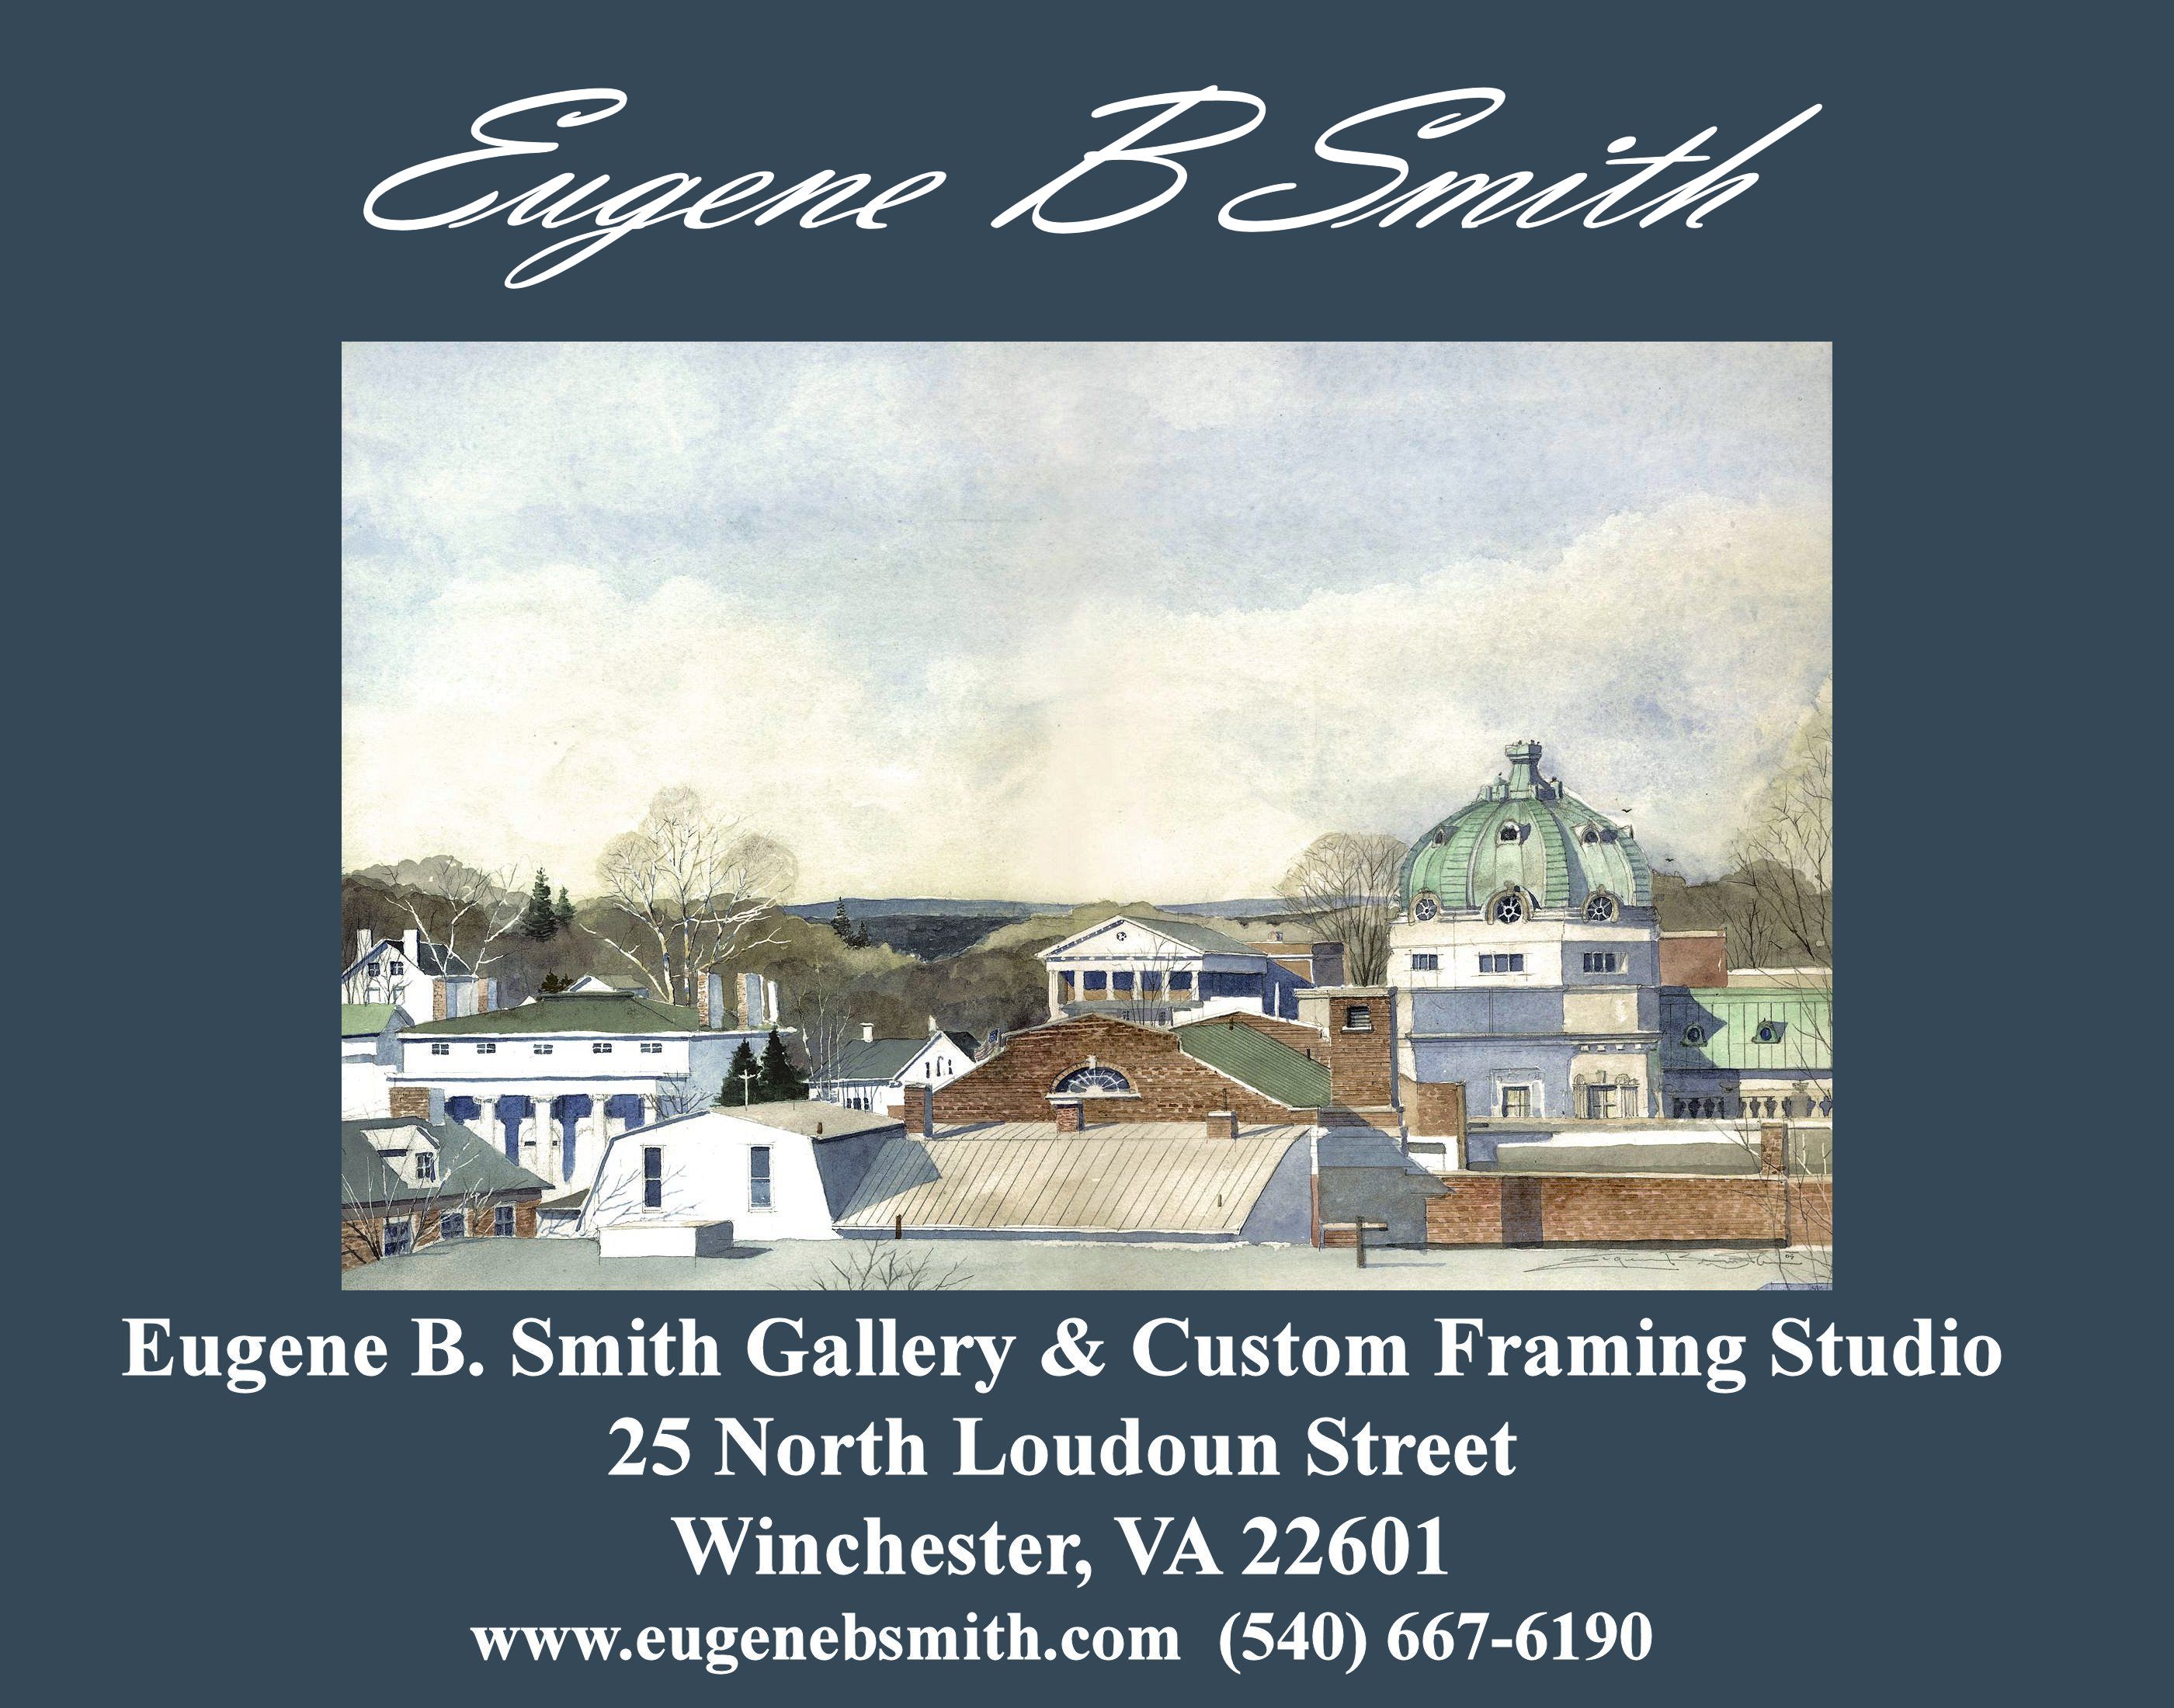 Eugene B. Smith Gallery